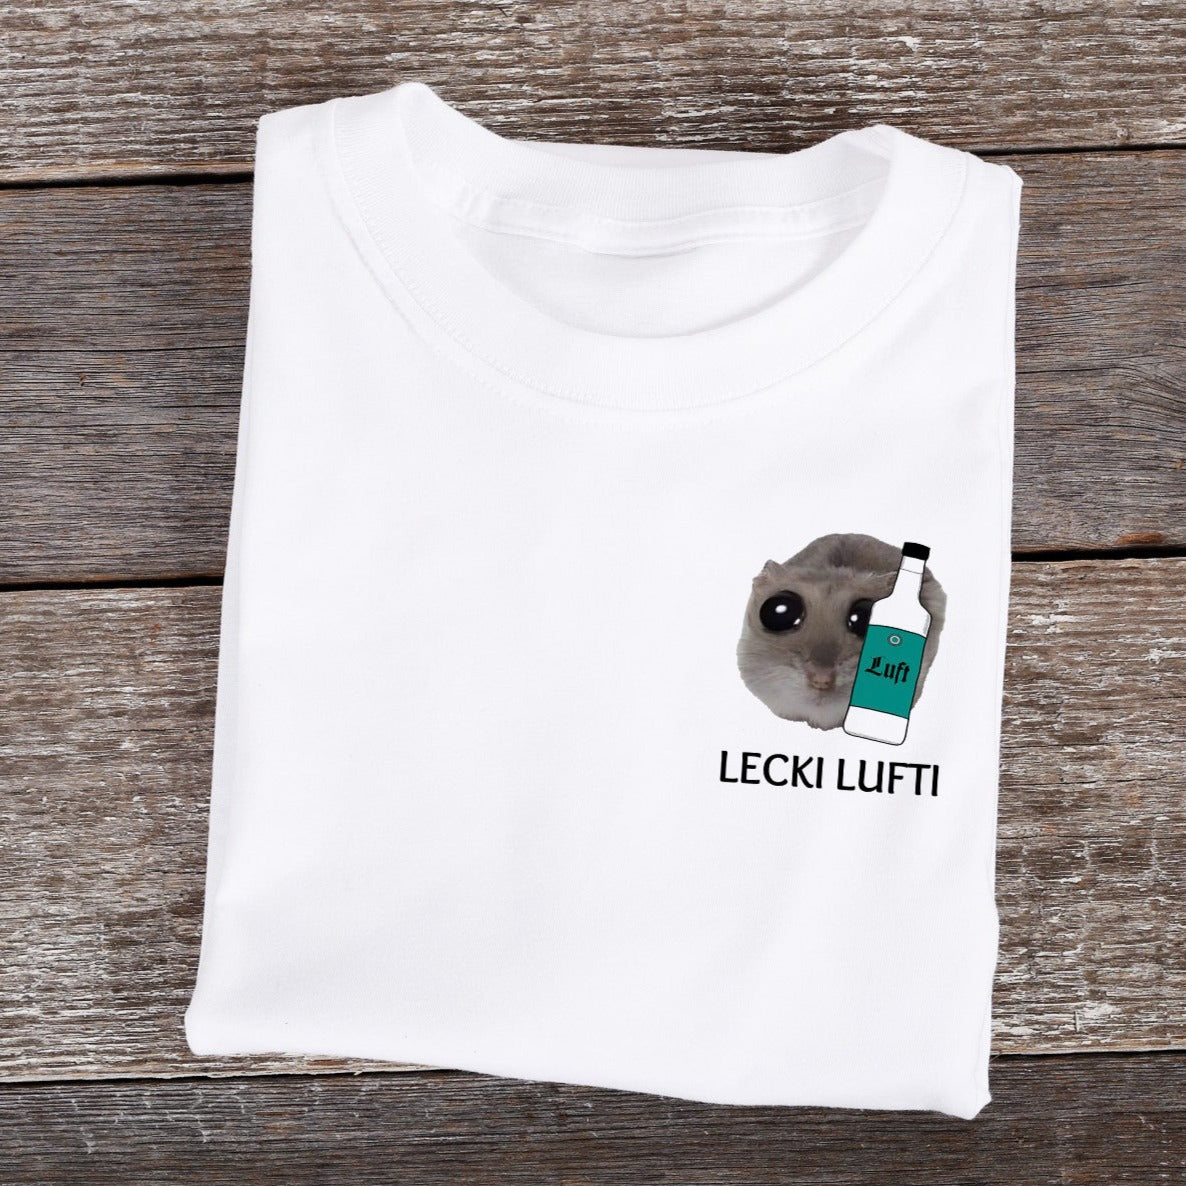 LECKI LUFTI - Shirt